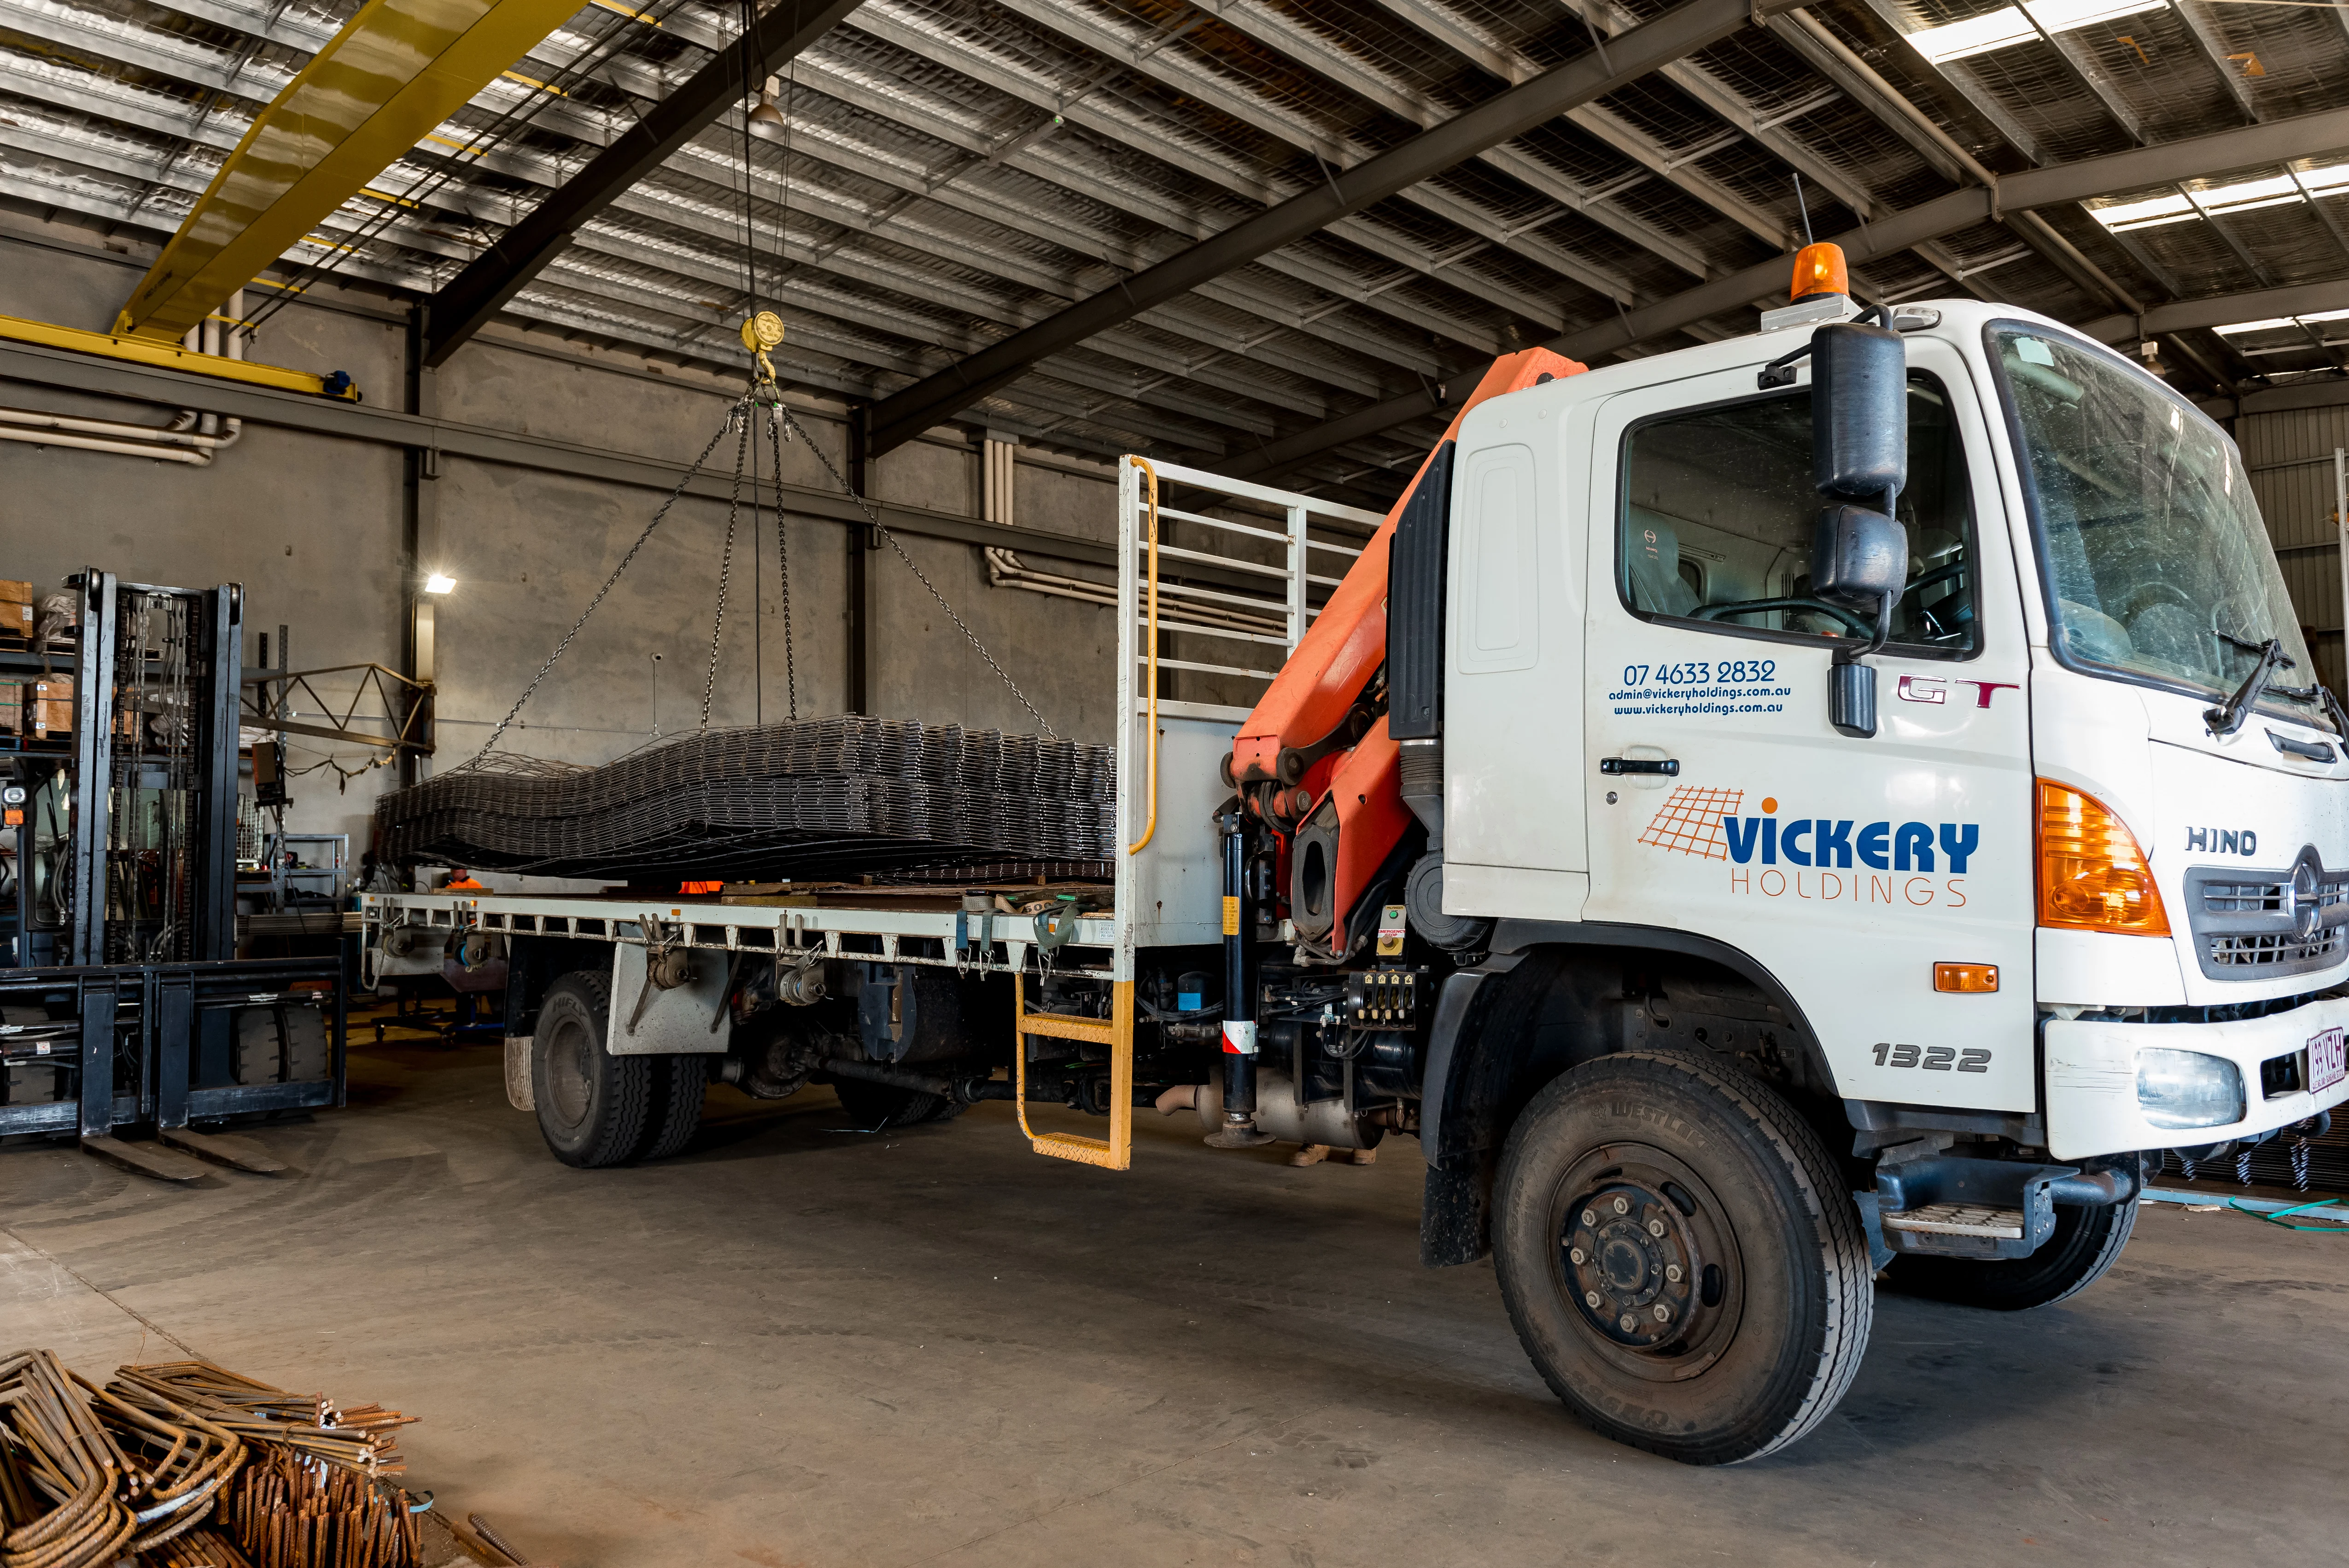 Vickery-Holdings-loading-truck